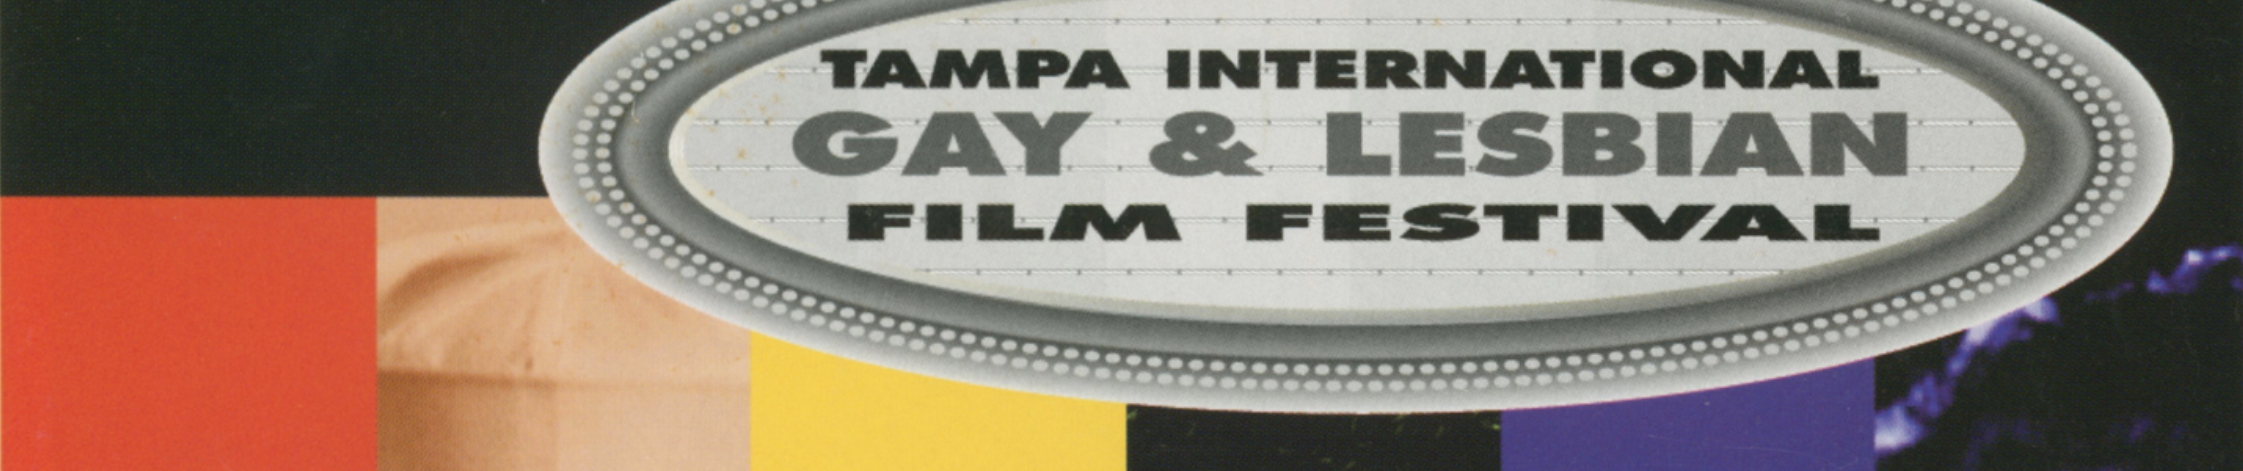 Tampa Bay International Gay & Lesbian Film Festival (TIGLFF) Collection